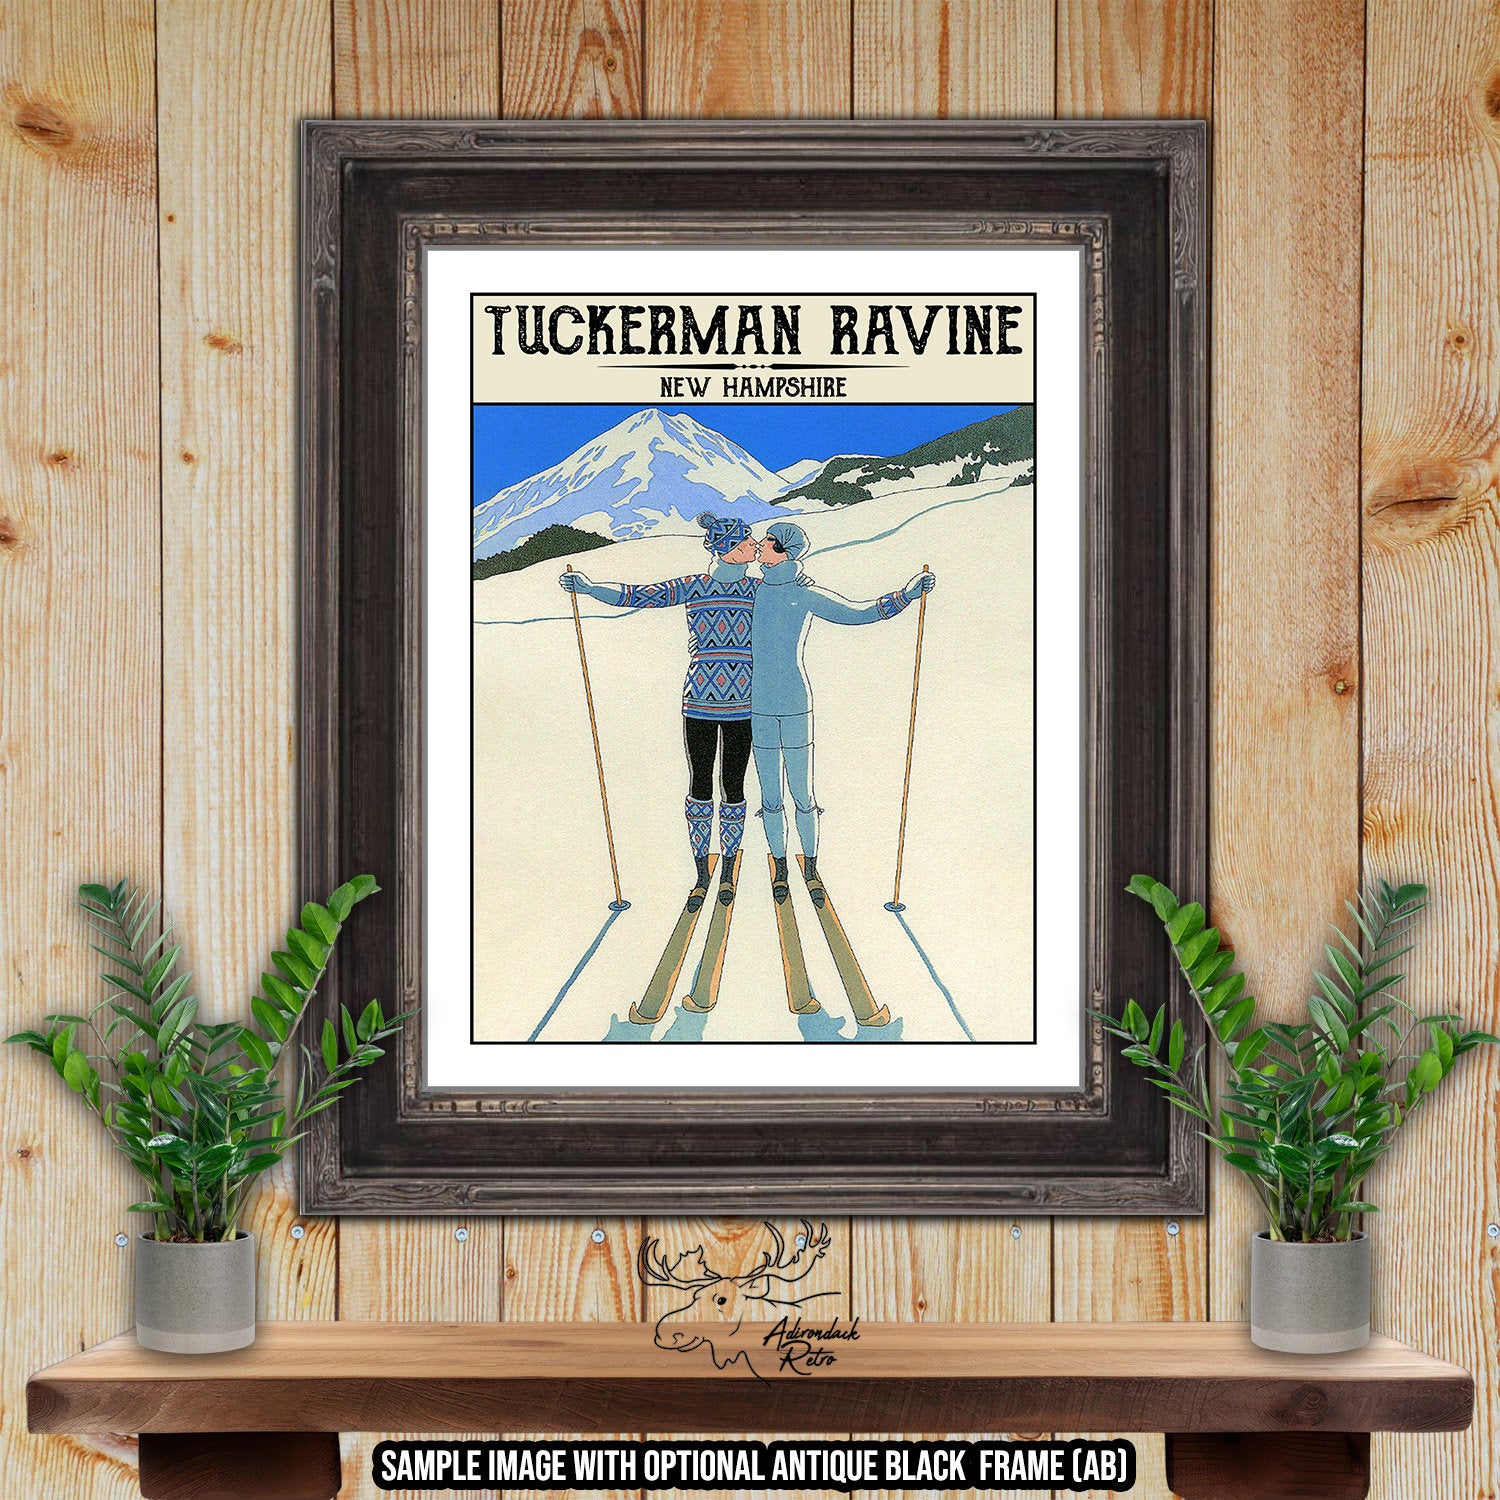 Tuckerman Ravine New Hampshire Retro Ski Resort Print at Adirondack Retro